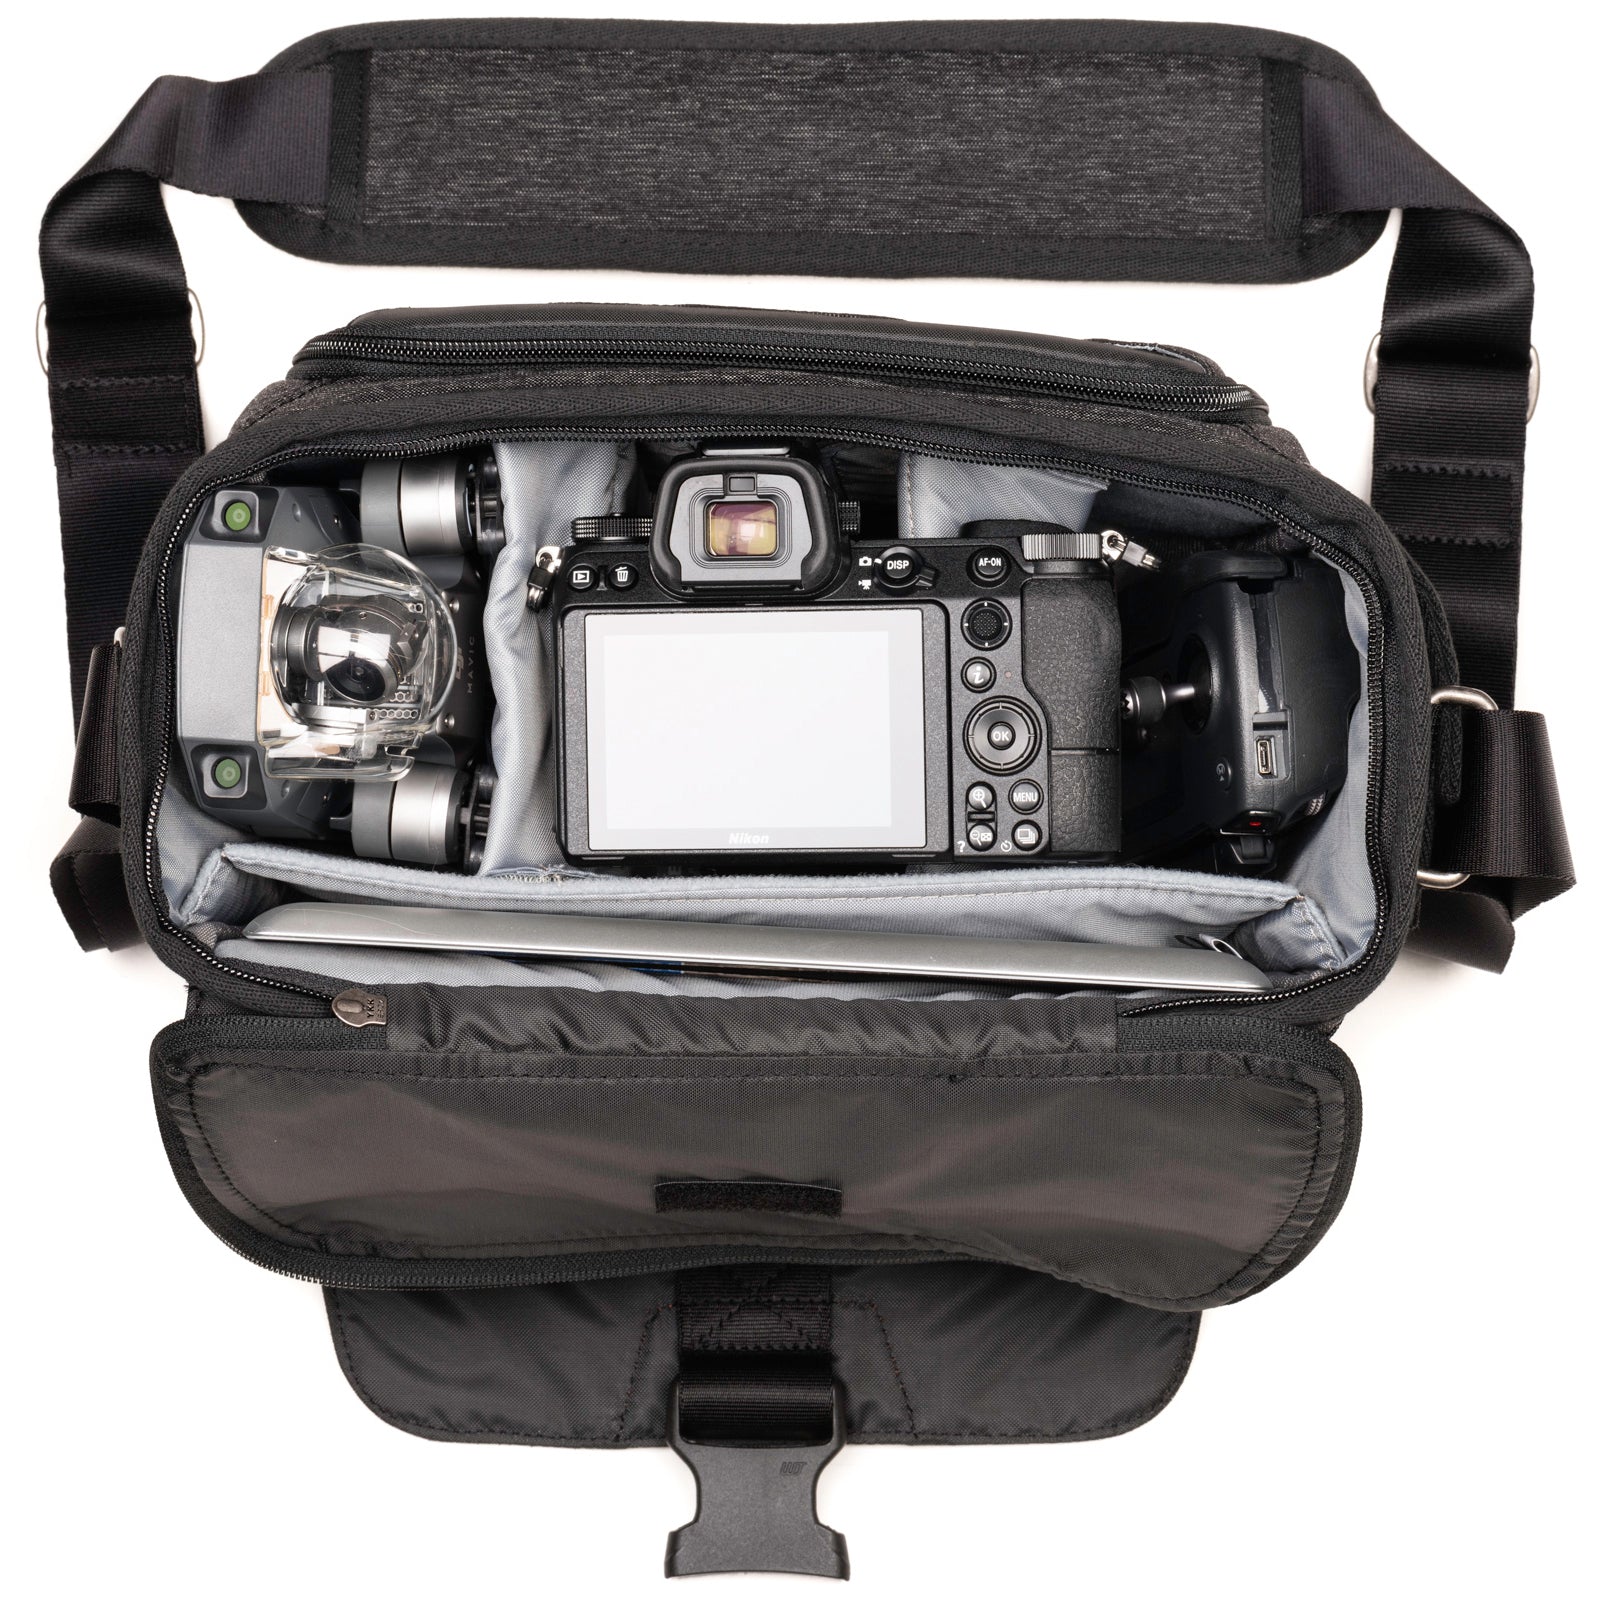 Think Tank Photo Vision 15 Shoulder Bag REVIEW - MacSources